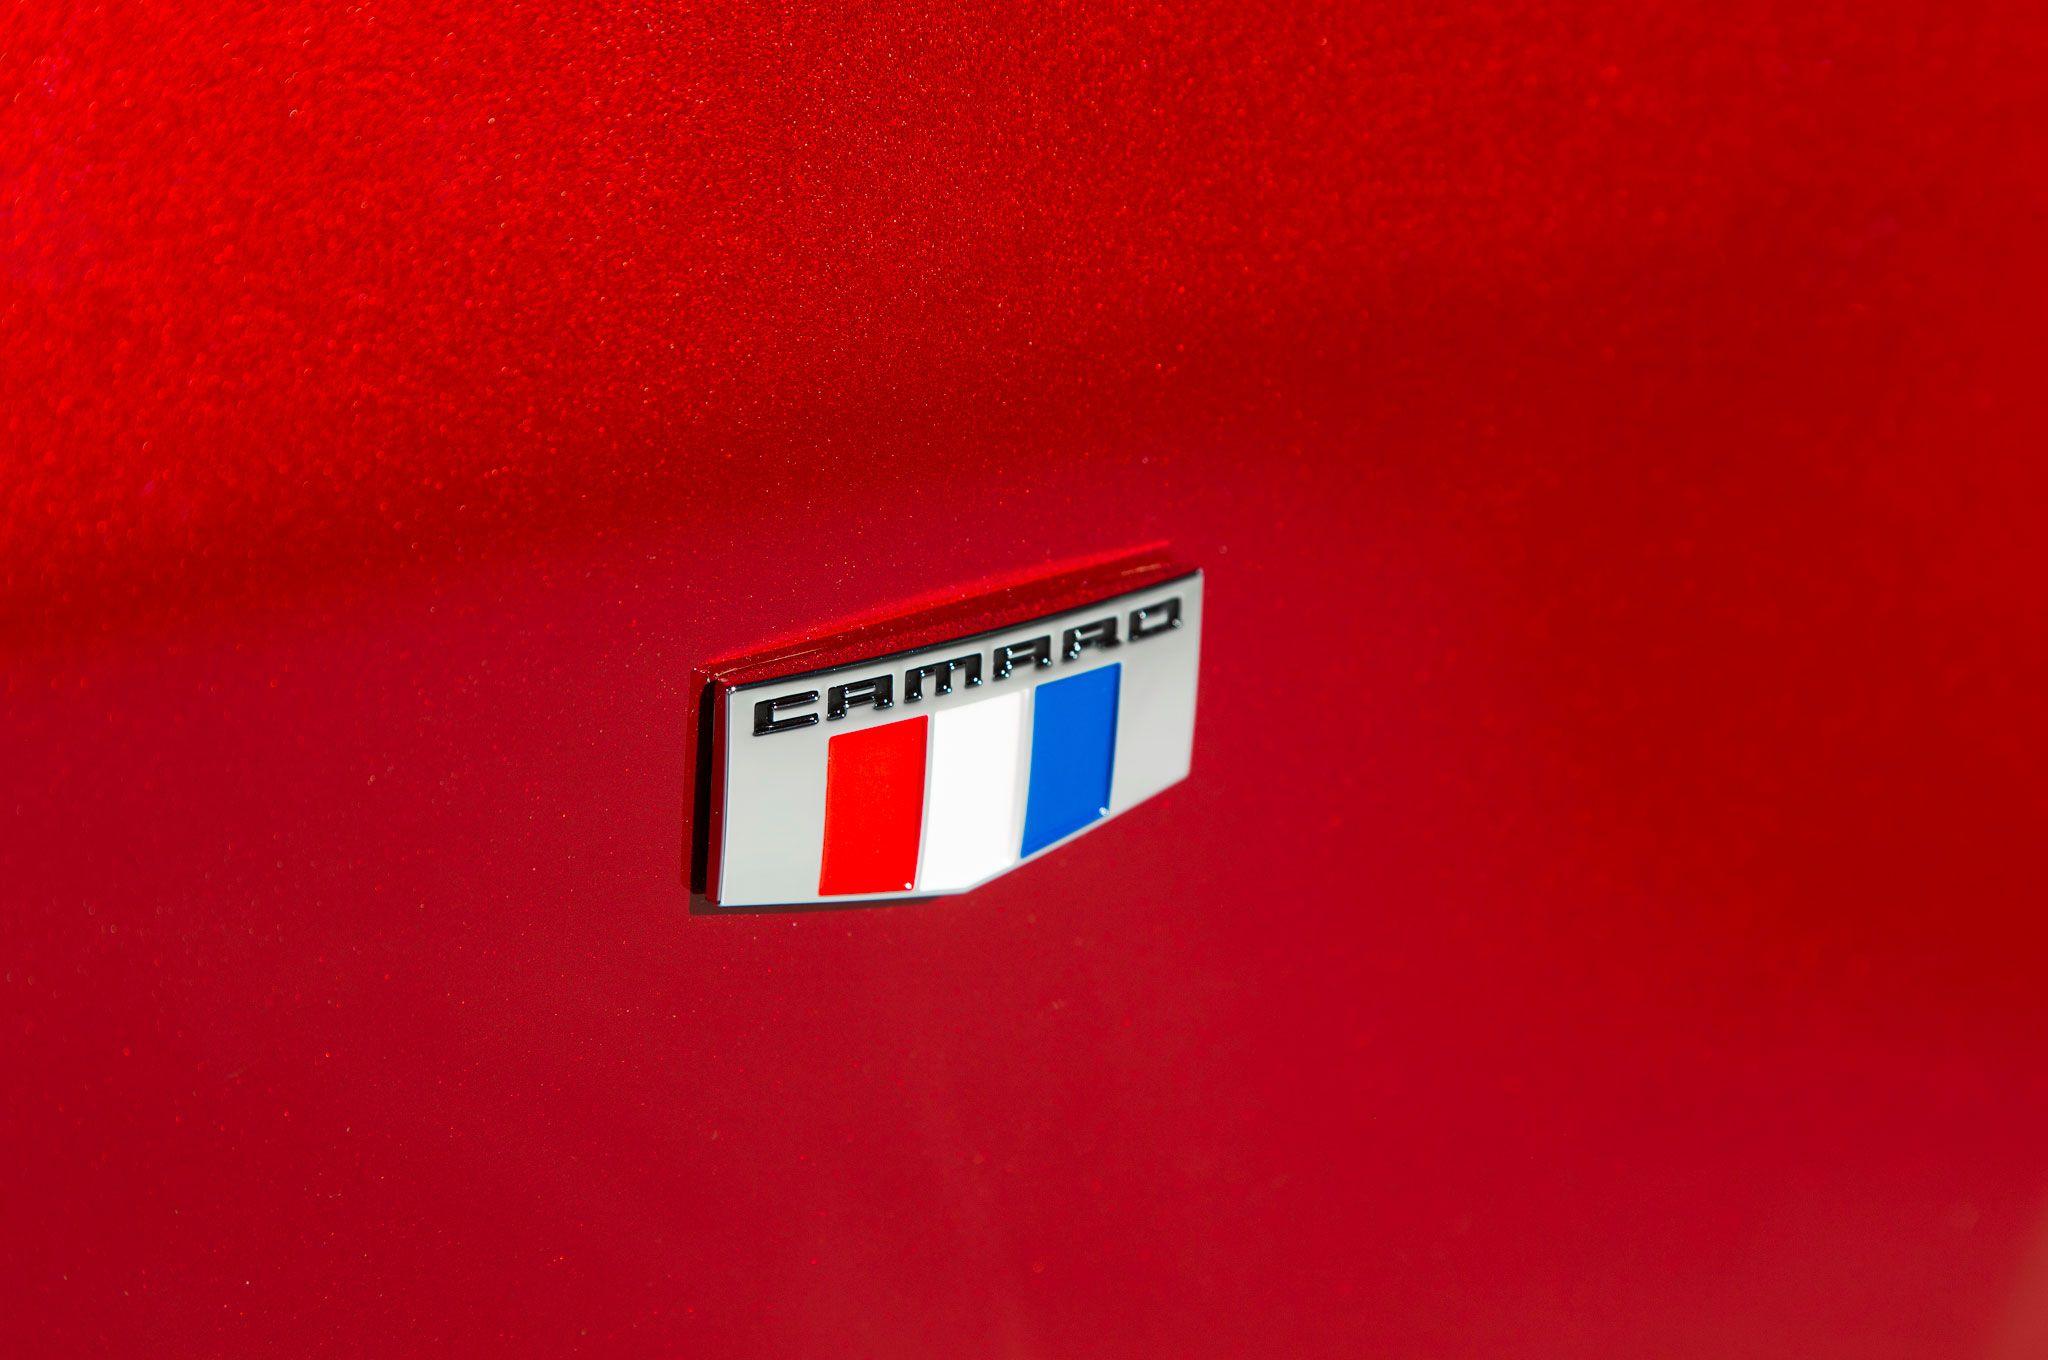 Camaro RSS Logo - 2016 Chevrolet Camaro Revealed - Inside the New Sixth-Gen Camaro